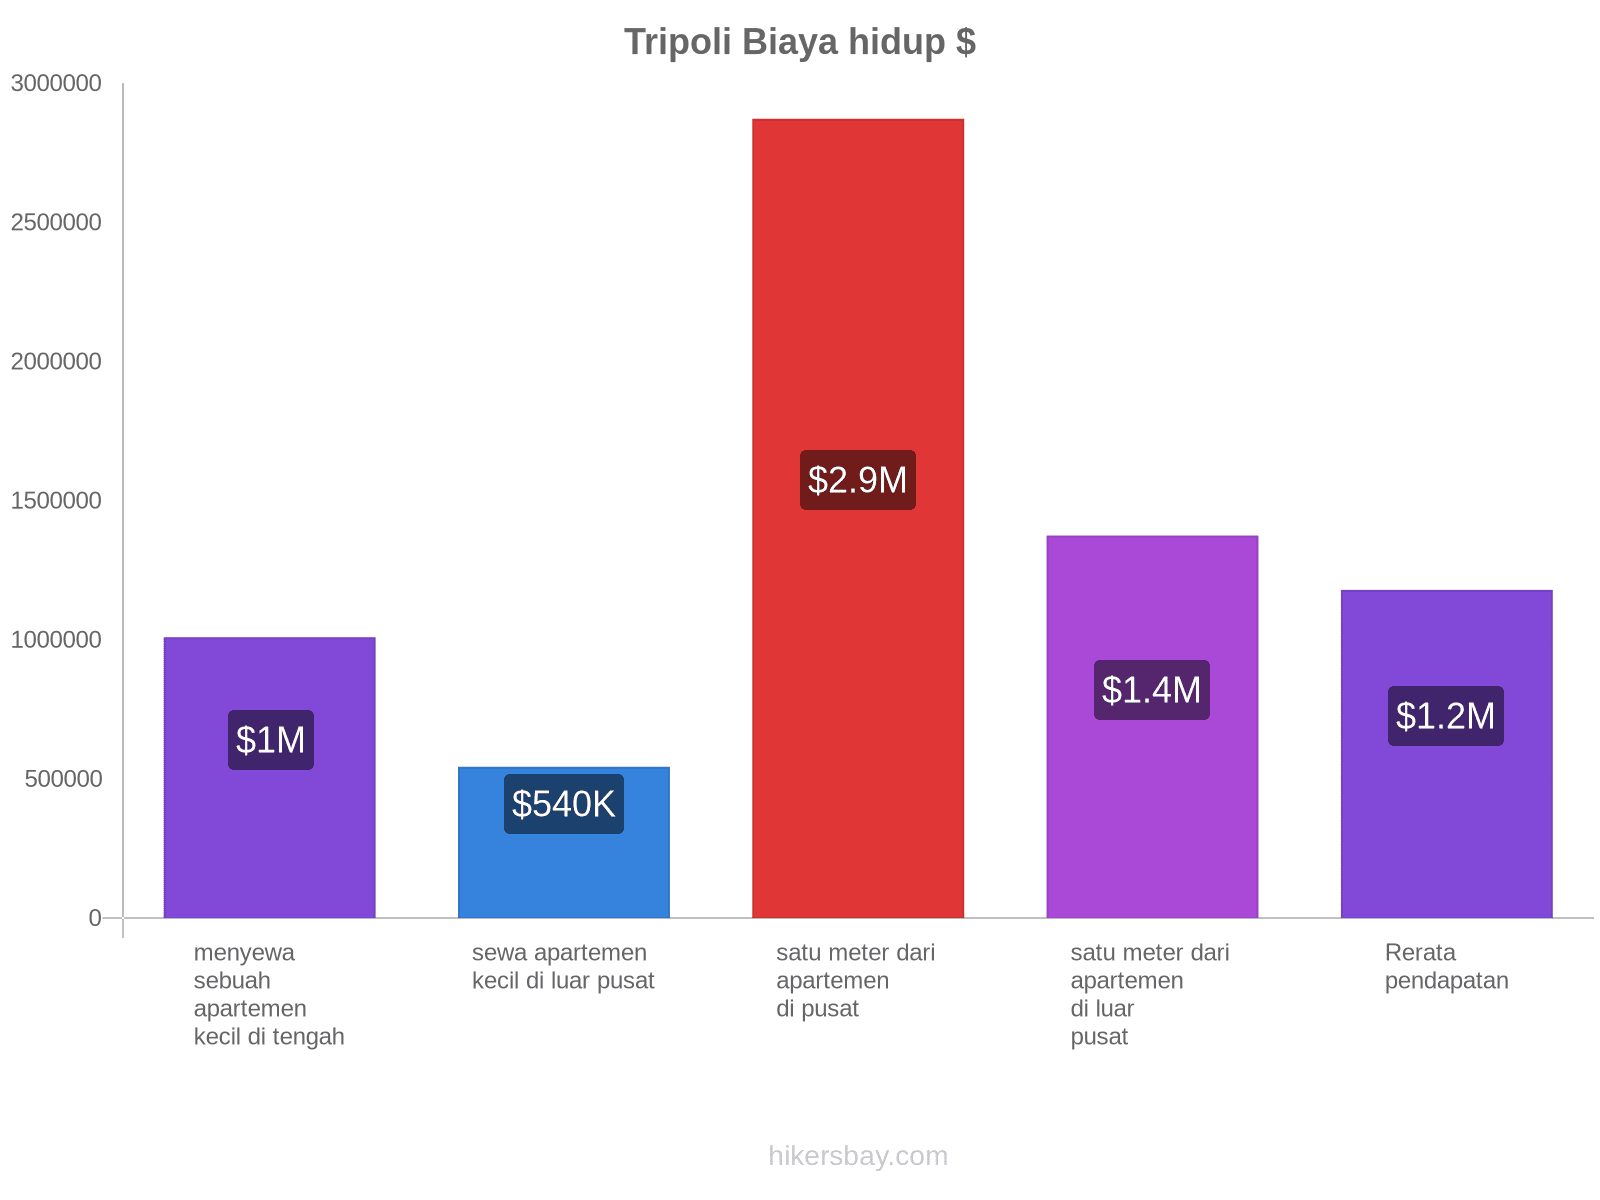 Tripoli biaya hidup hikersbay.com